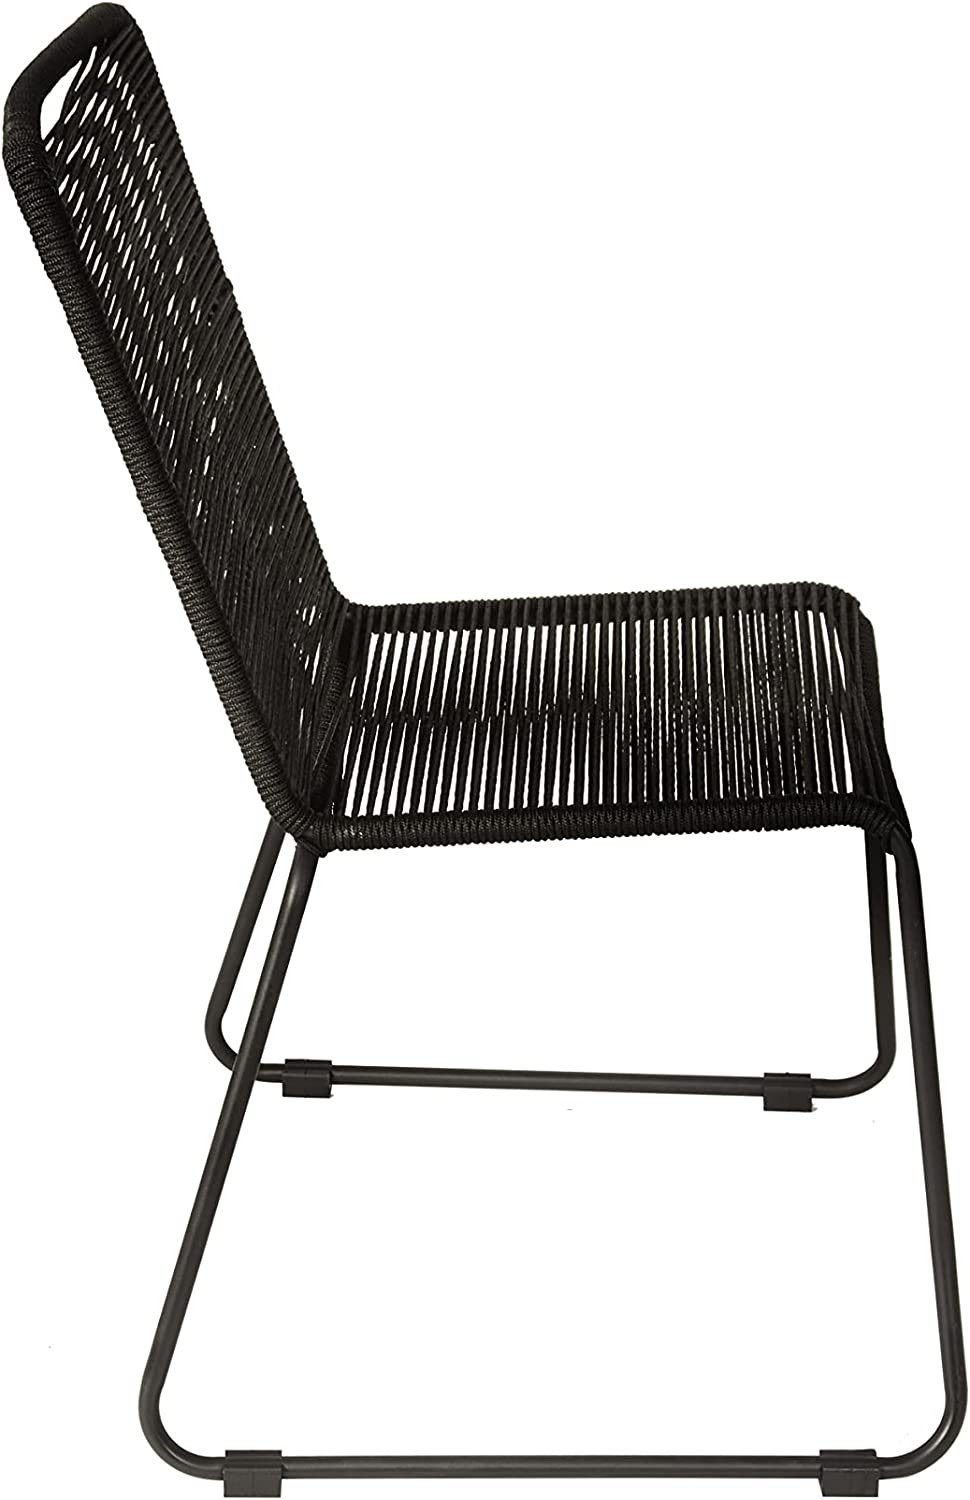 Trendstore Gartenstuhl Isra, Rope Chair, stabelbar, wahlweise in drei  Farben lieferbar